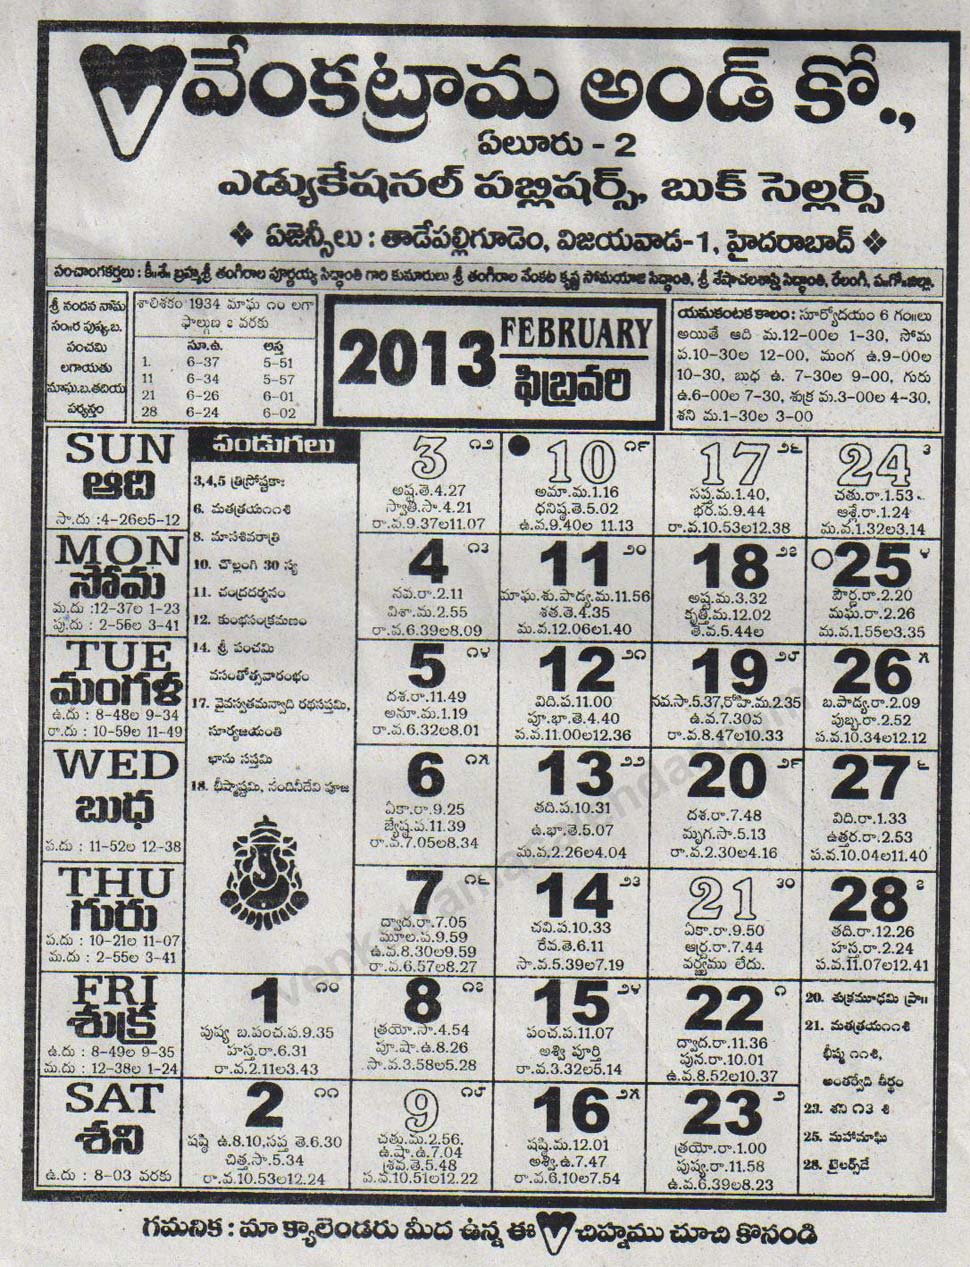 Venkatrama Co Telugu Calendar 2013 February Venkatrama Telugu